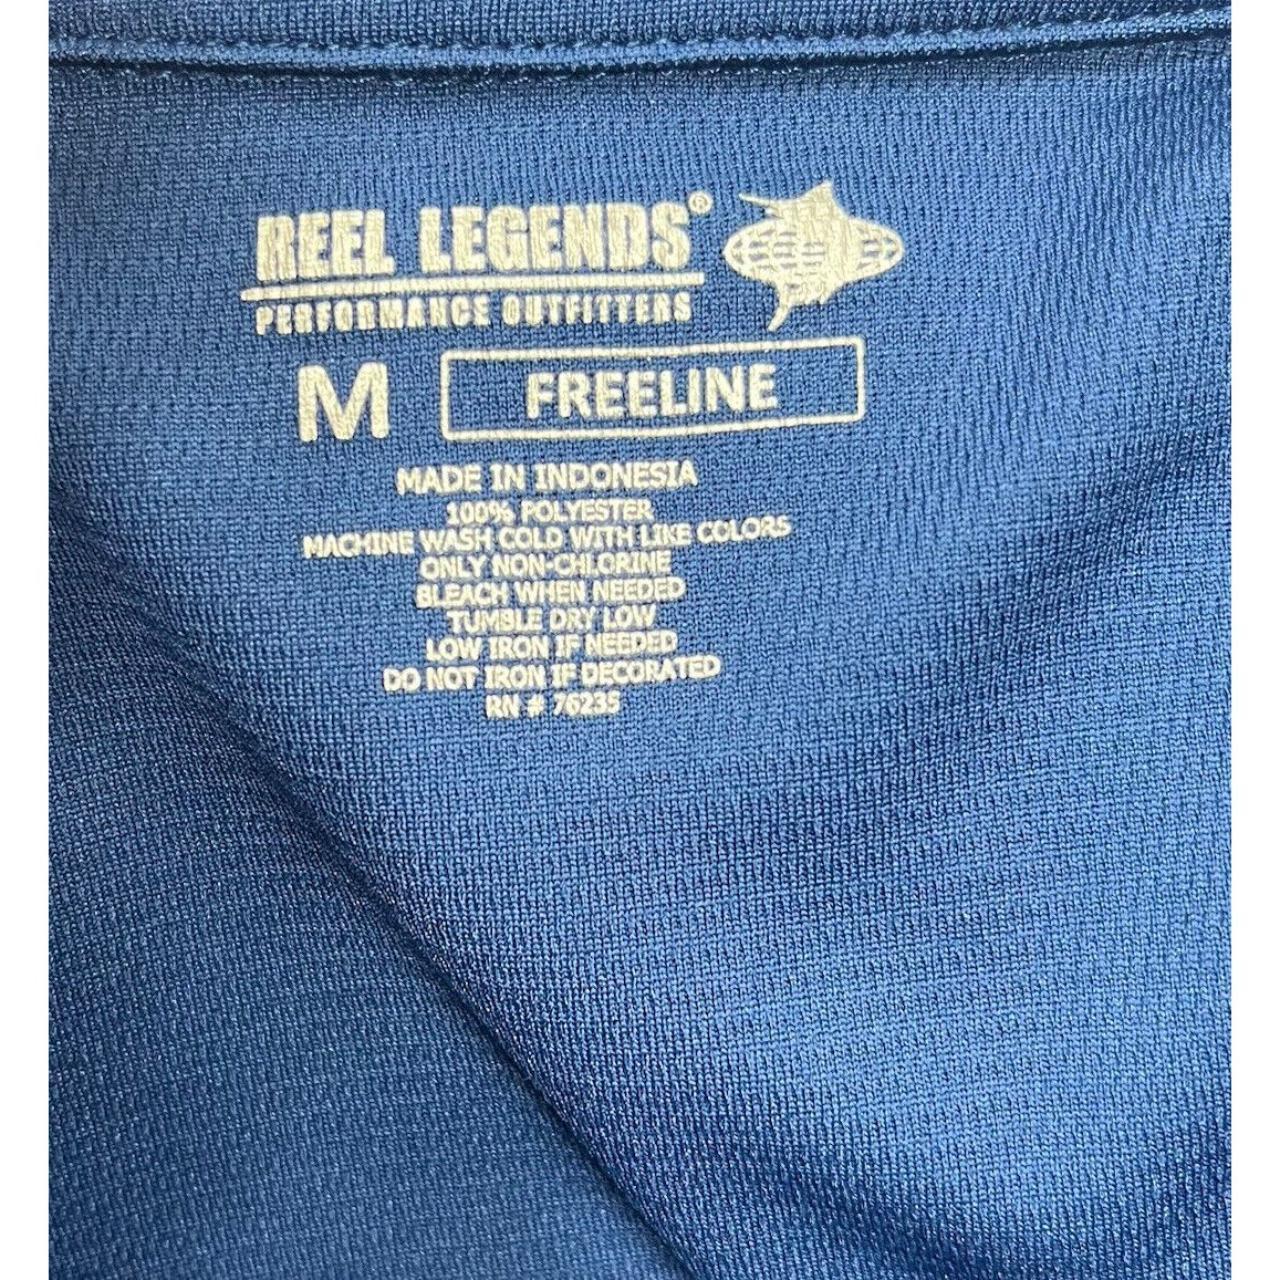 This Reel Legends Women's Freeline Long Sleeve Shirt - Depop